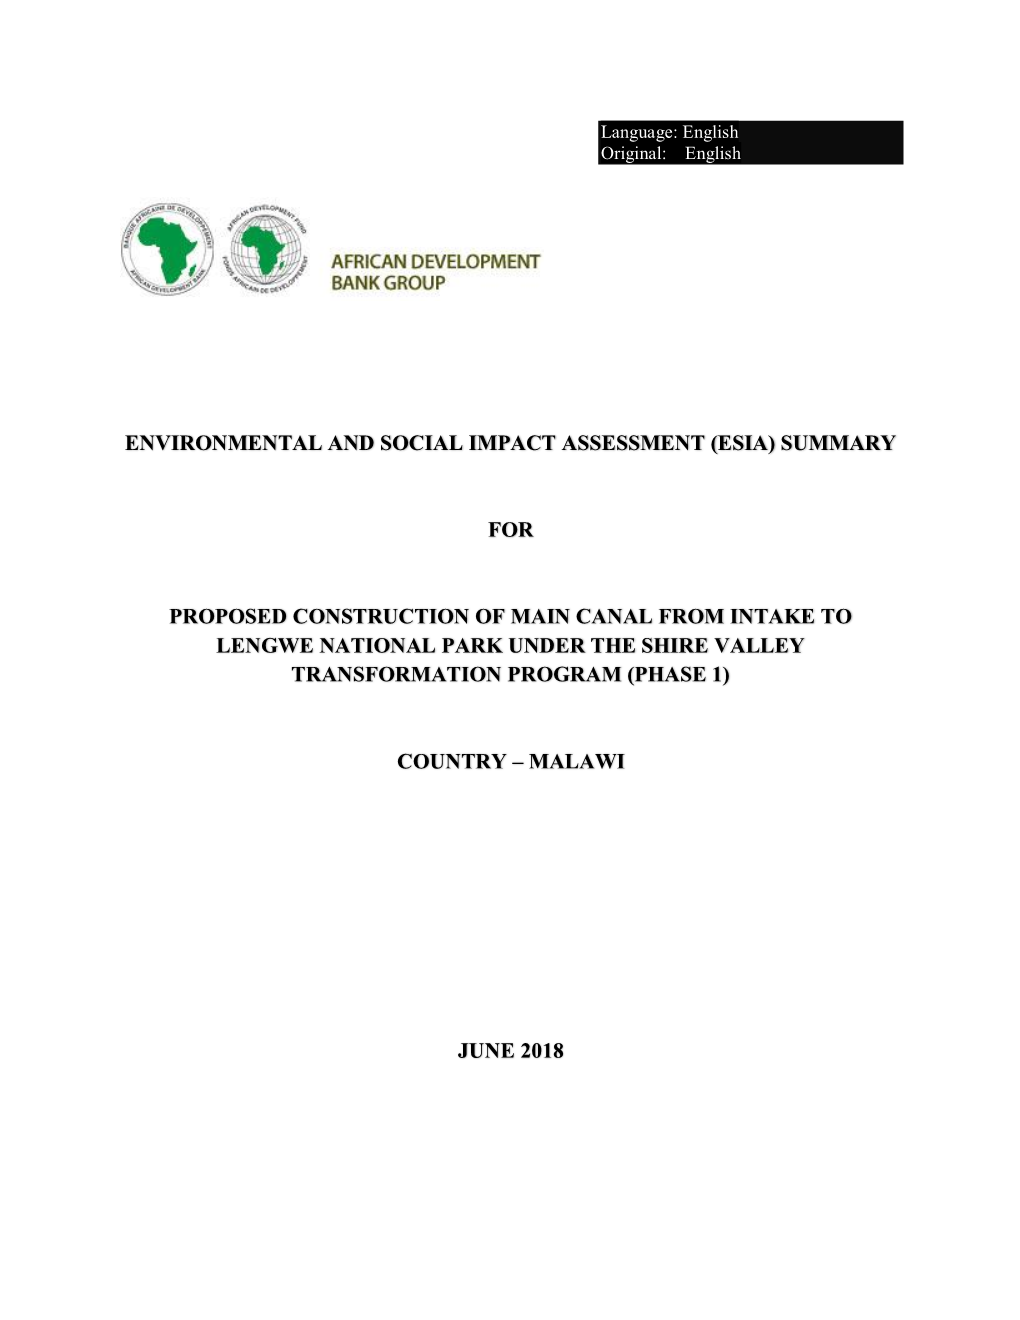 Environmental and Social Impact Assessment (Esia) Summary